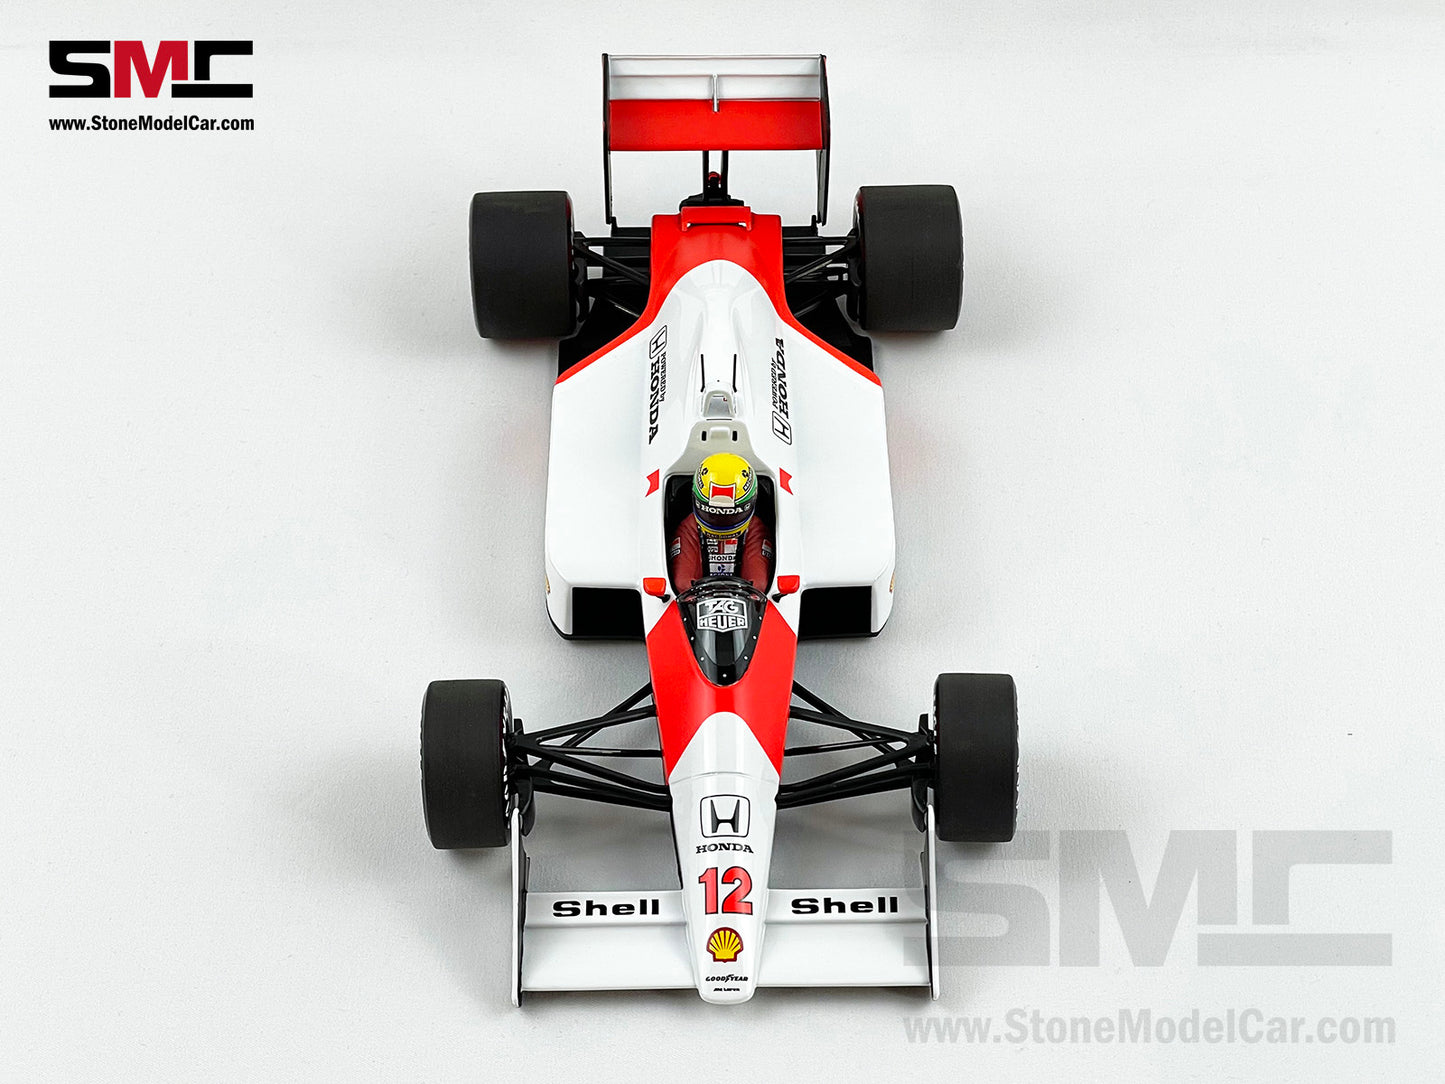 Mclaren F1 MP4/4 #12 Ayrton Senna Japan GP 1988 World Champion 1:18 MINICHAMPS